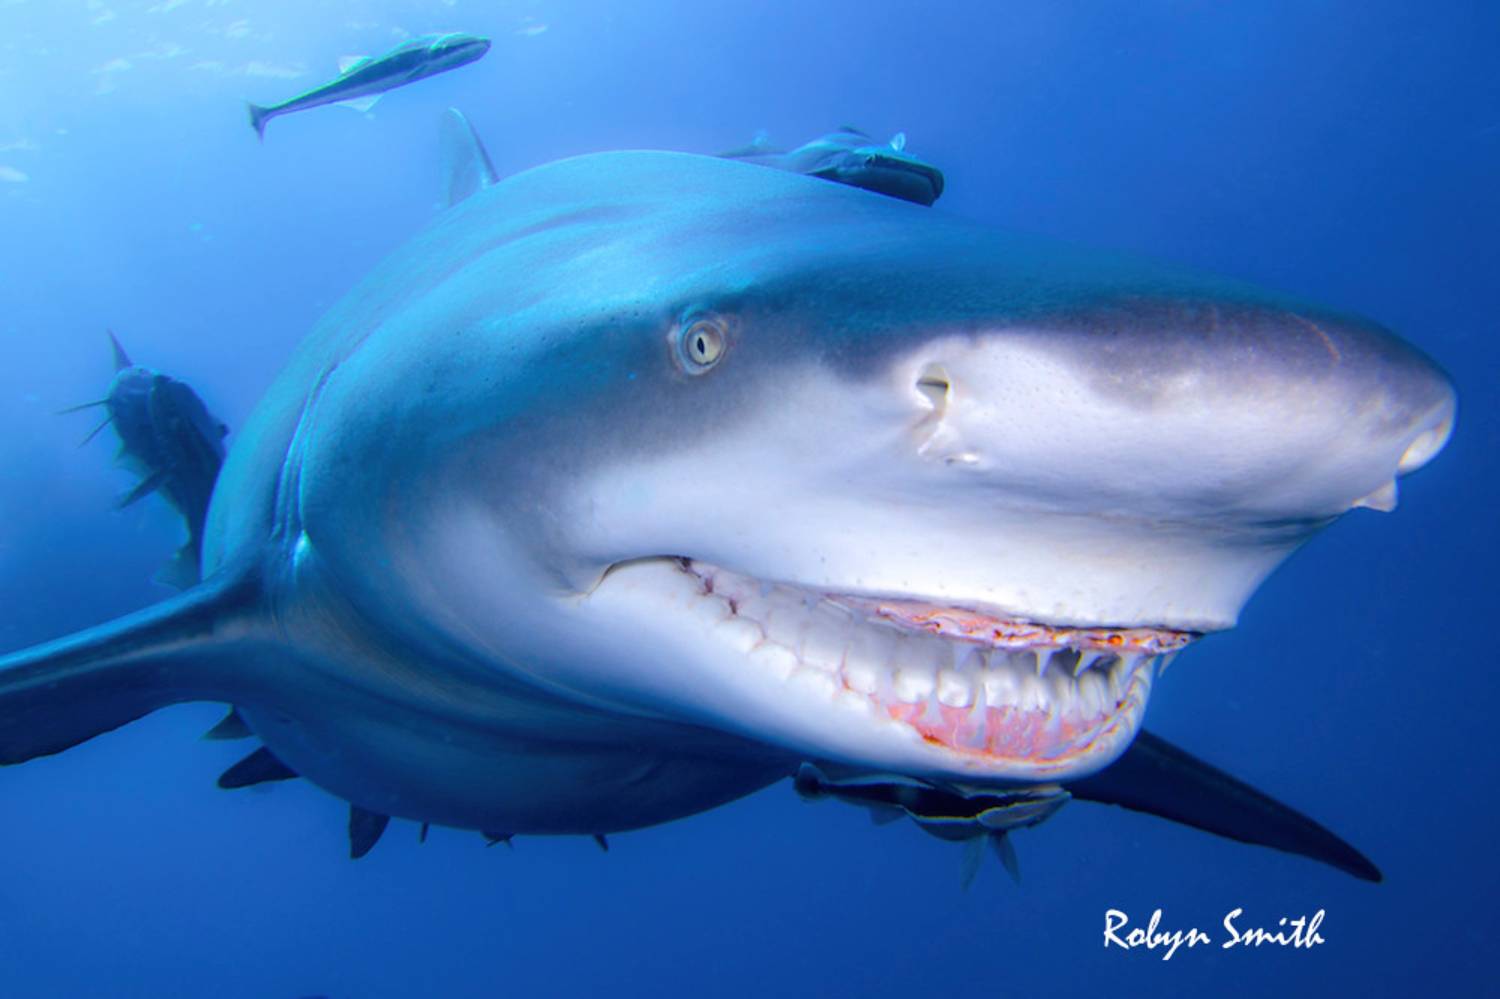 Snooty le requin citron souriant 6